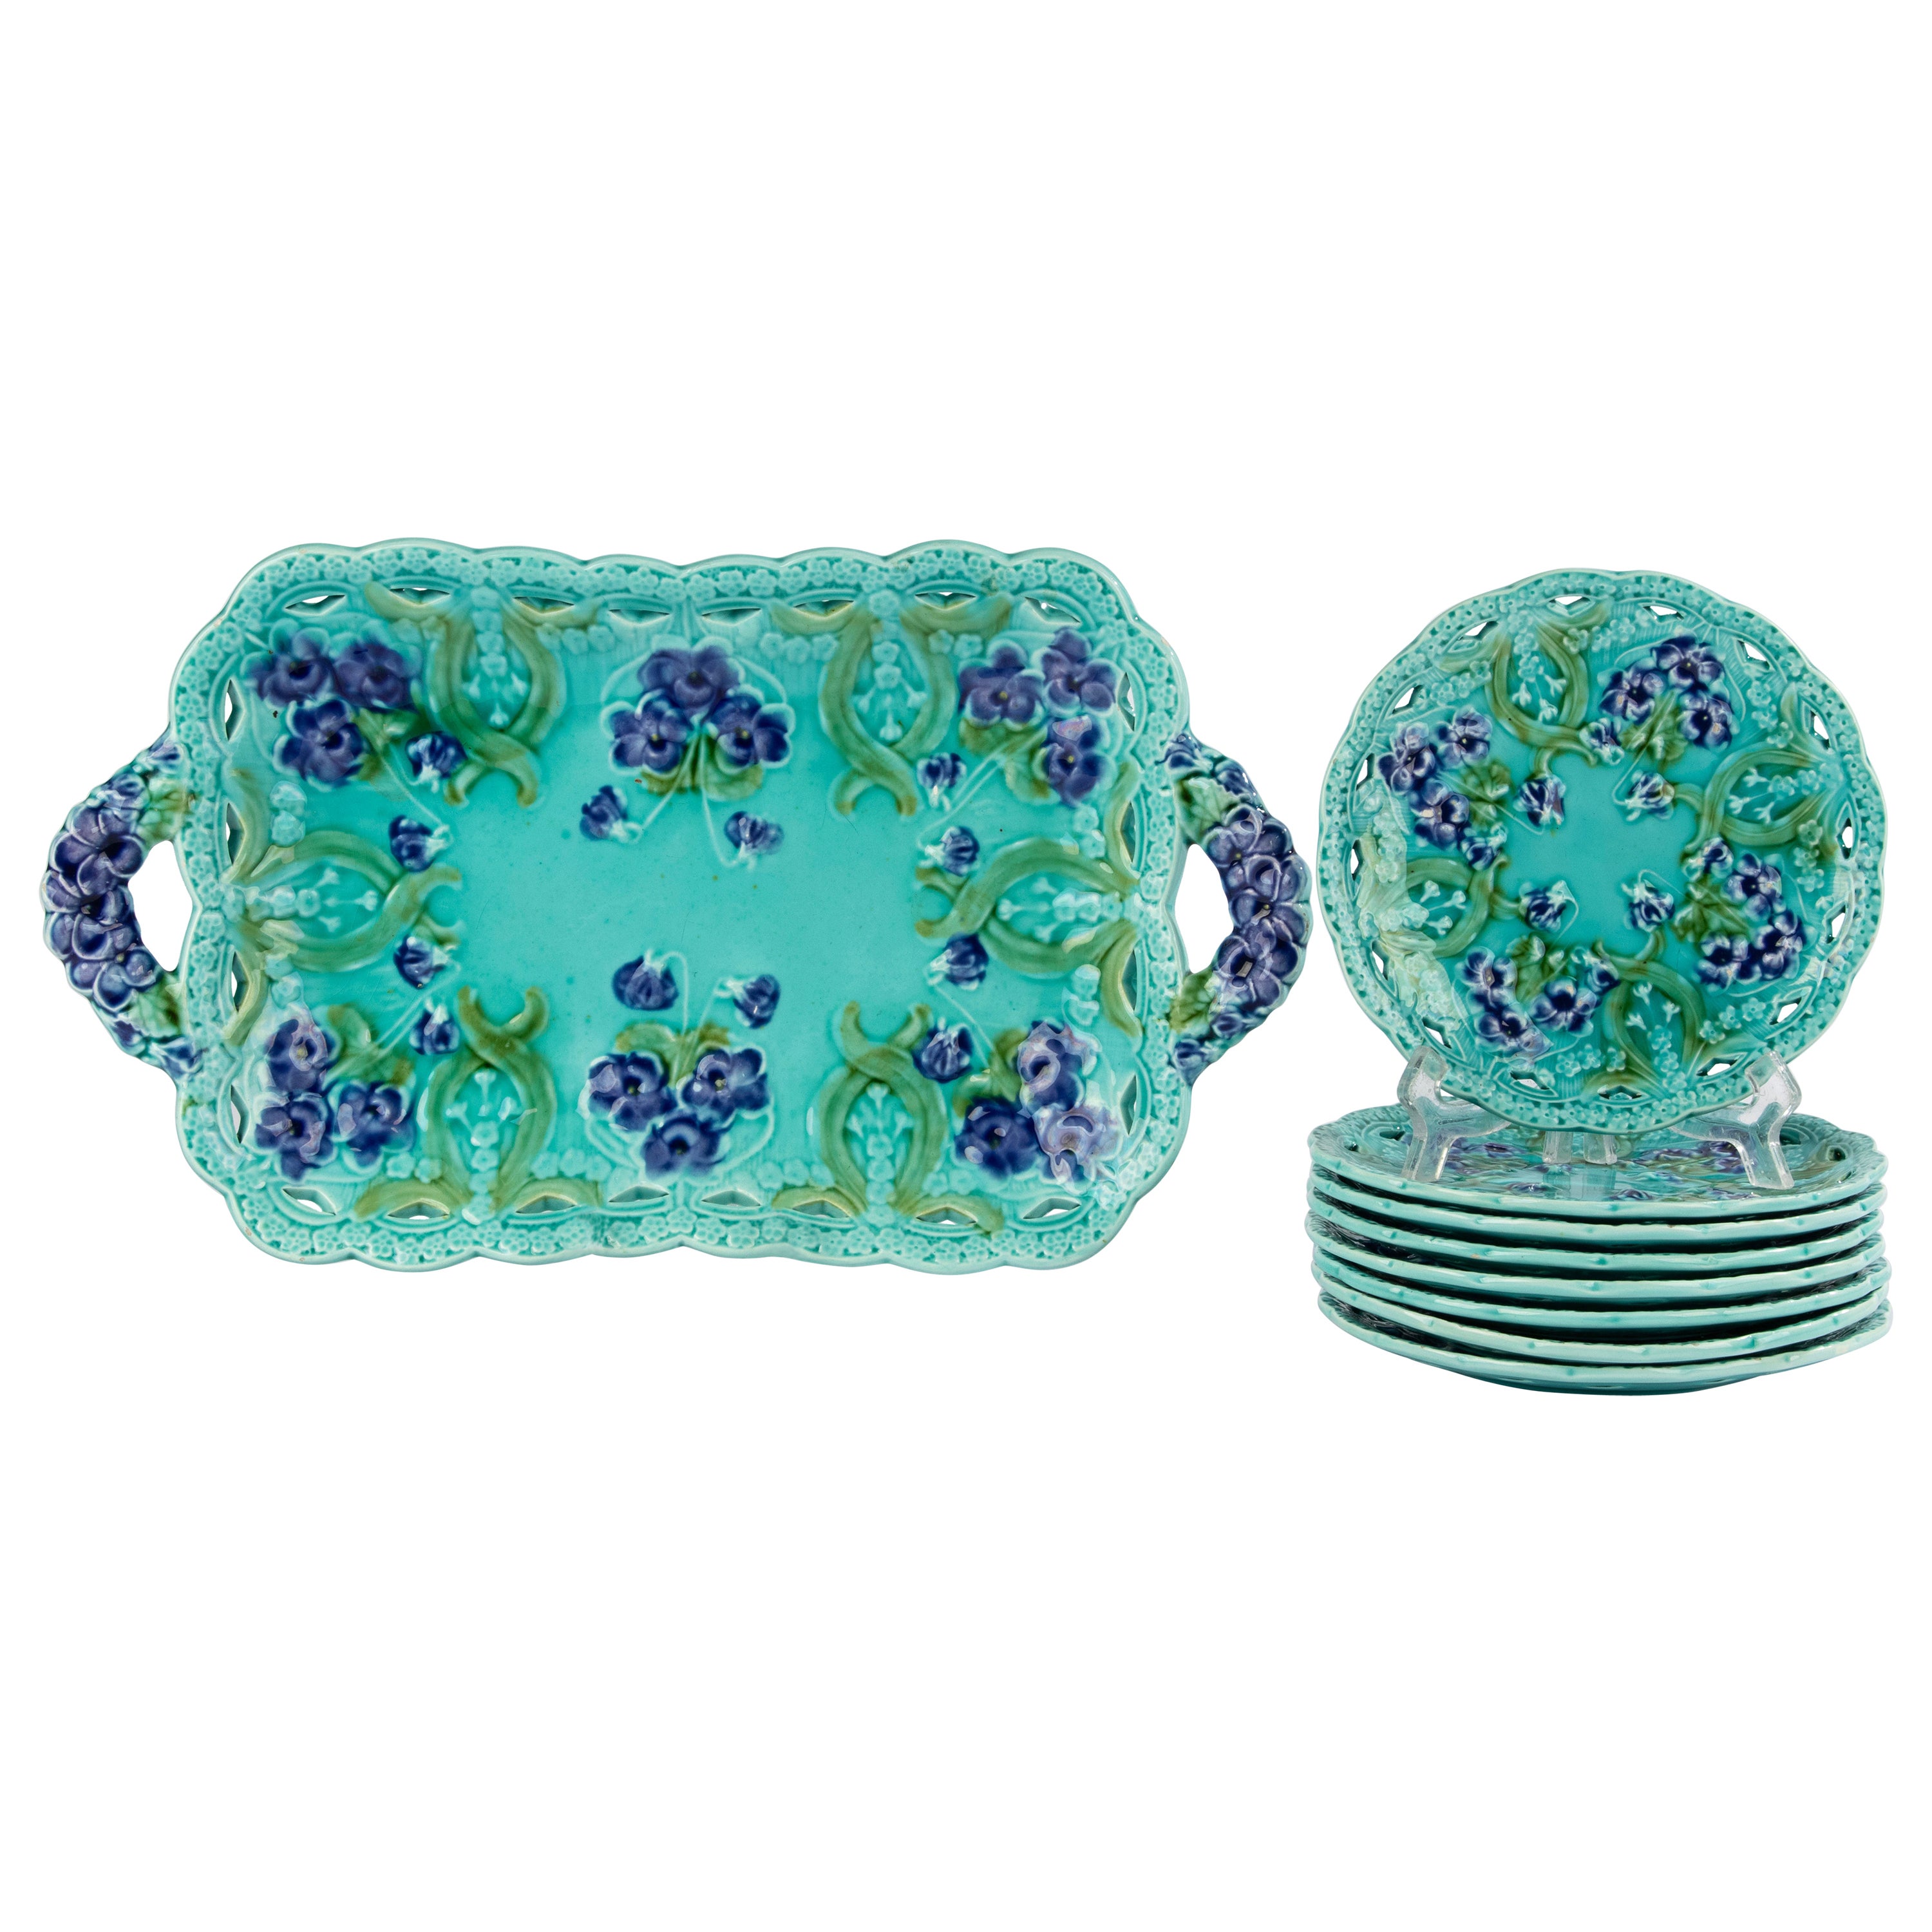 9-teiliges Majolika-Keramik-Torten-Set aus Keramik - Villeroy & Boch - Jugendstil 